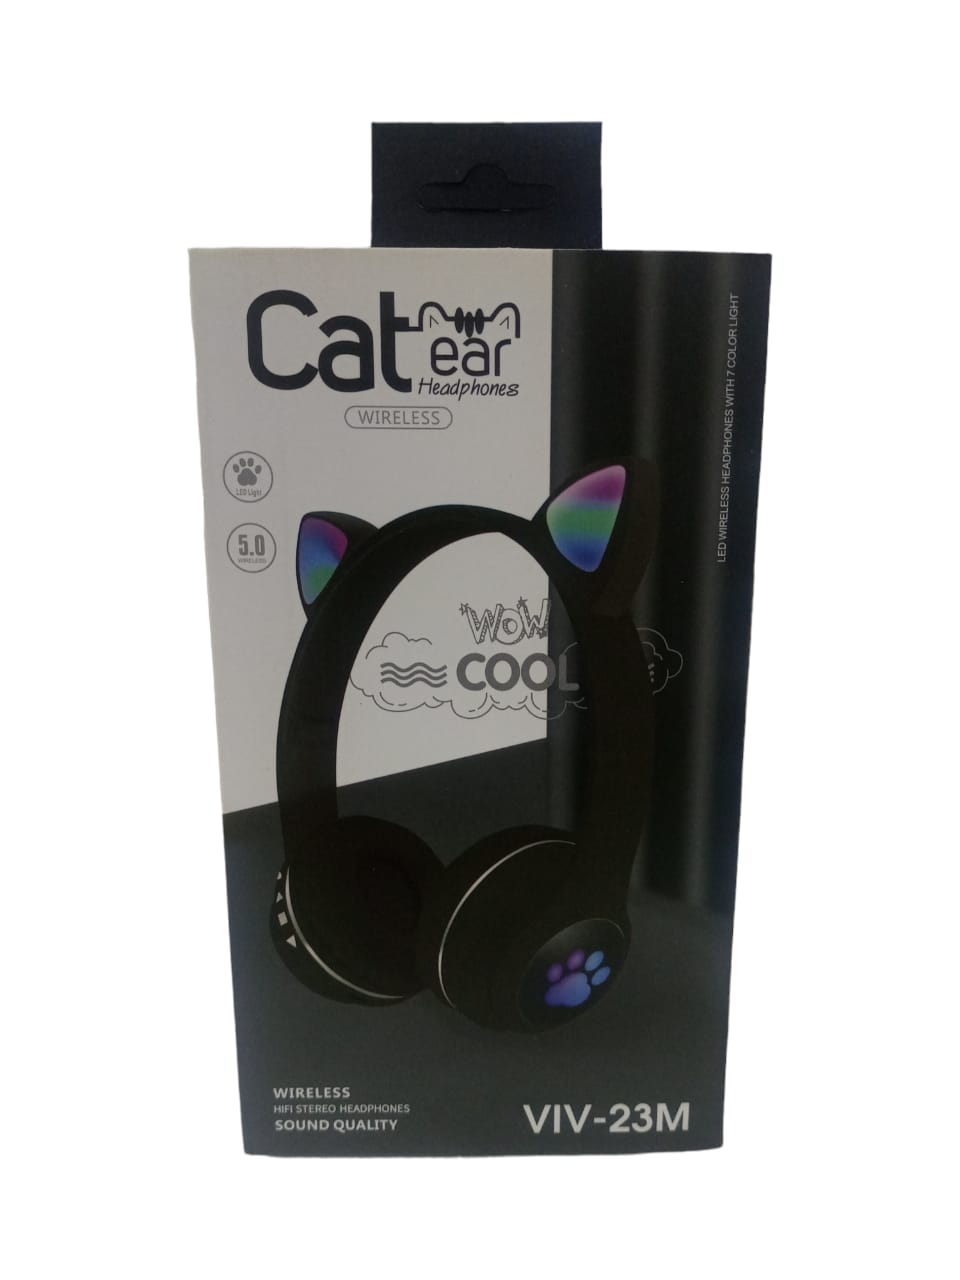 Catear Wireless Headphones VIV-23M